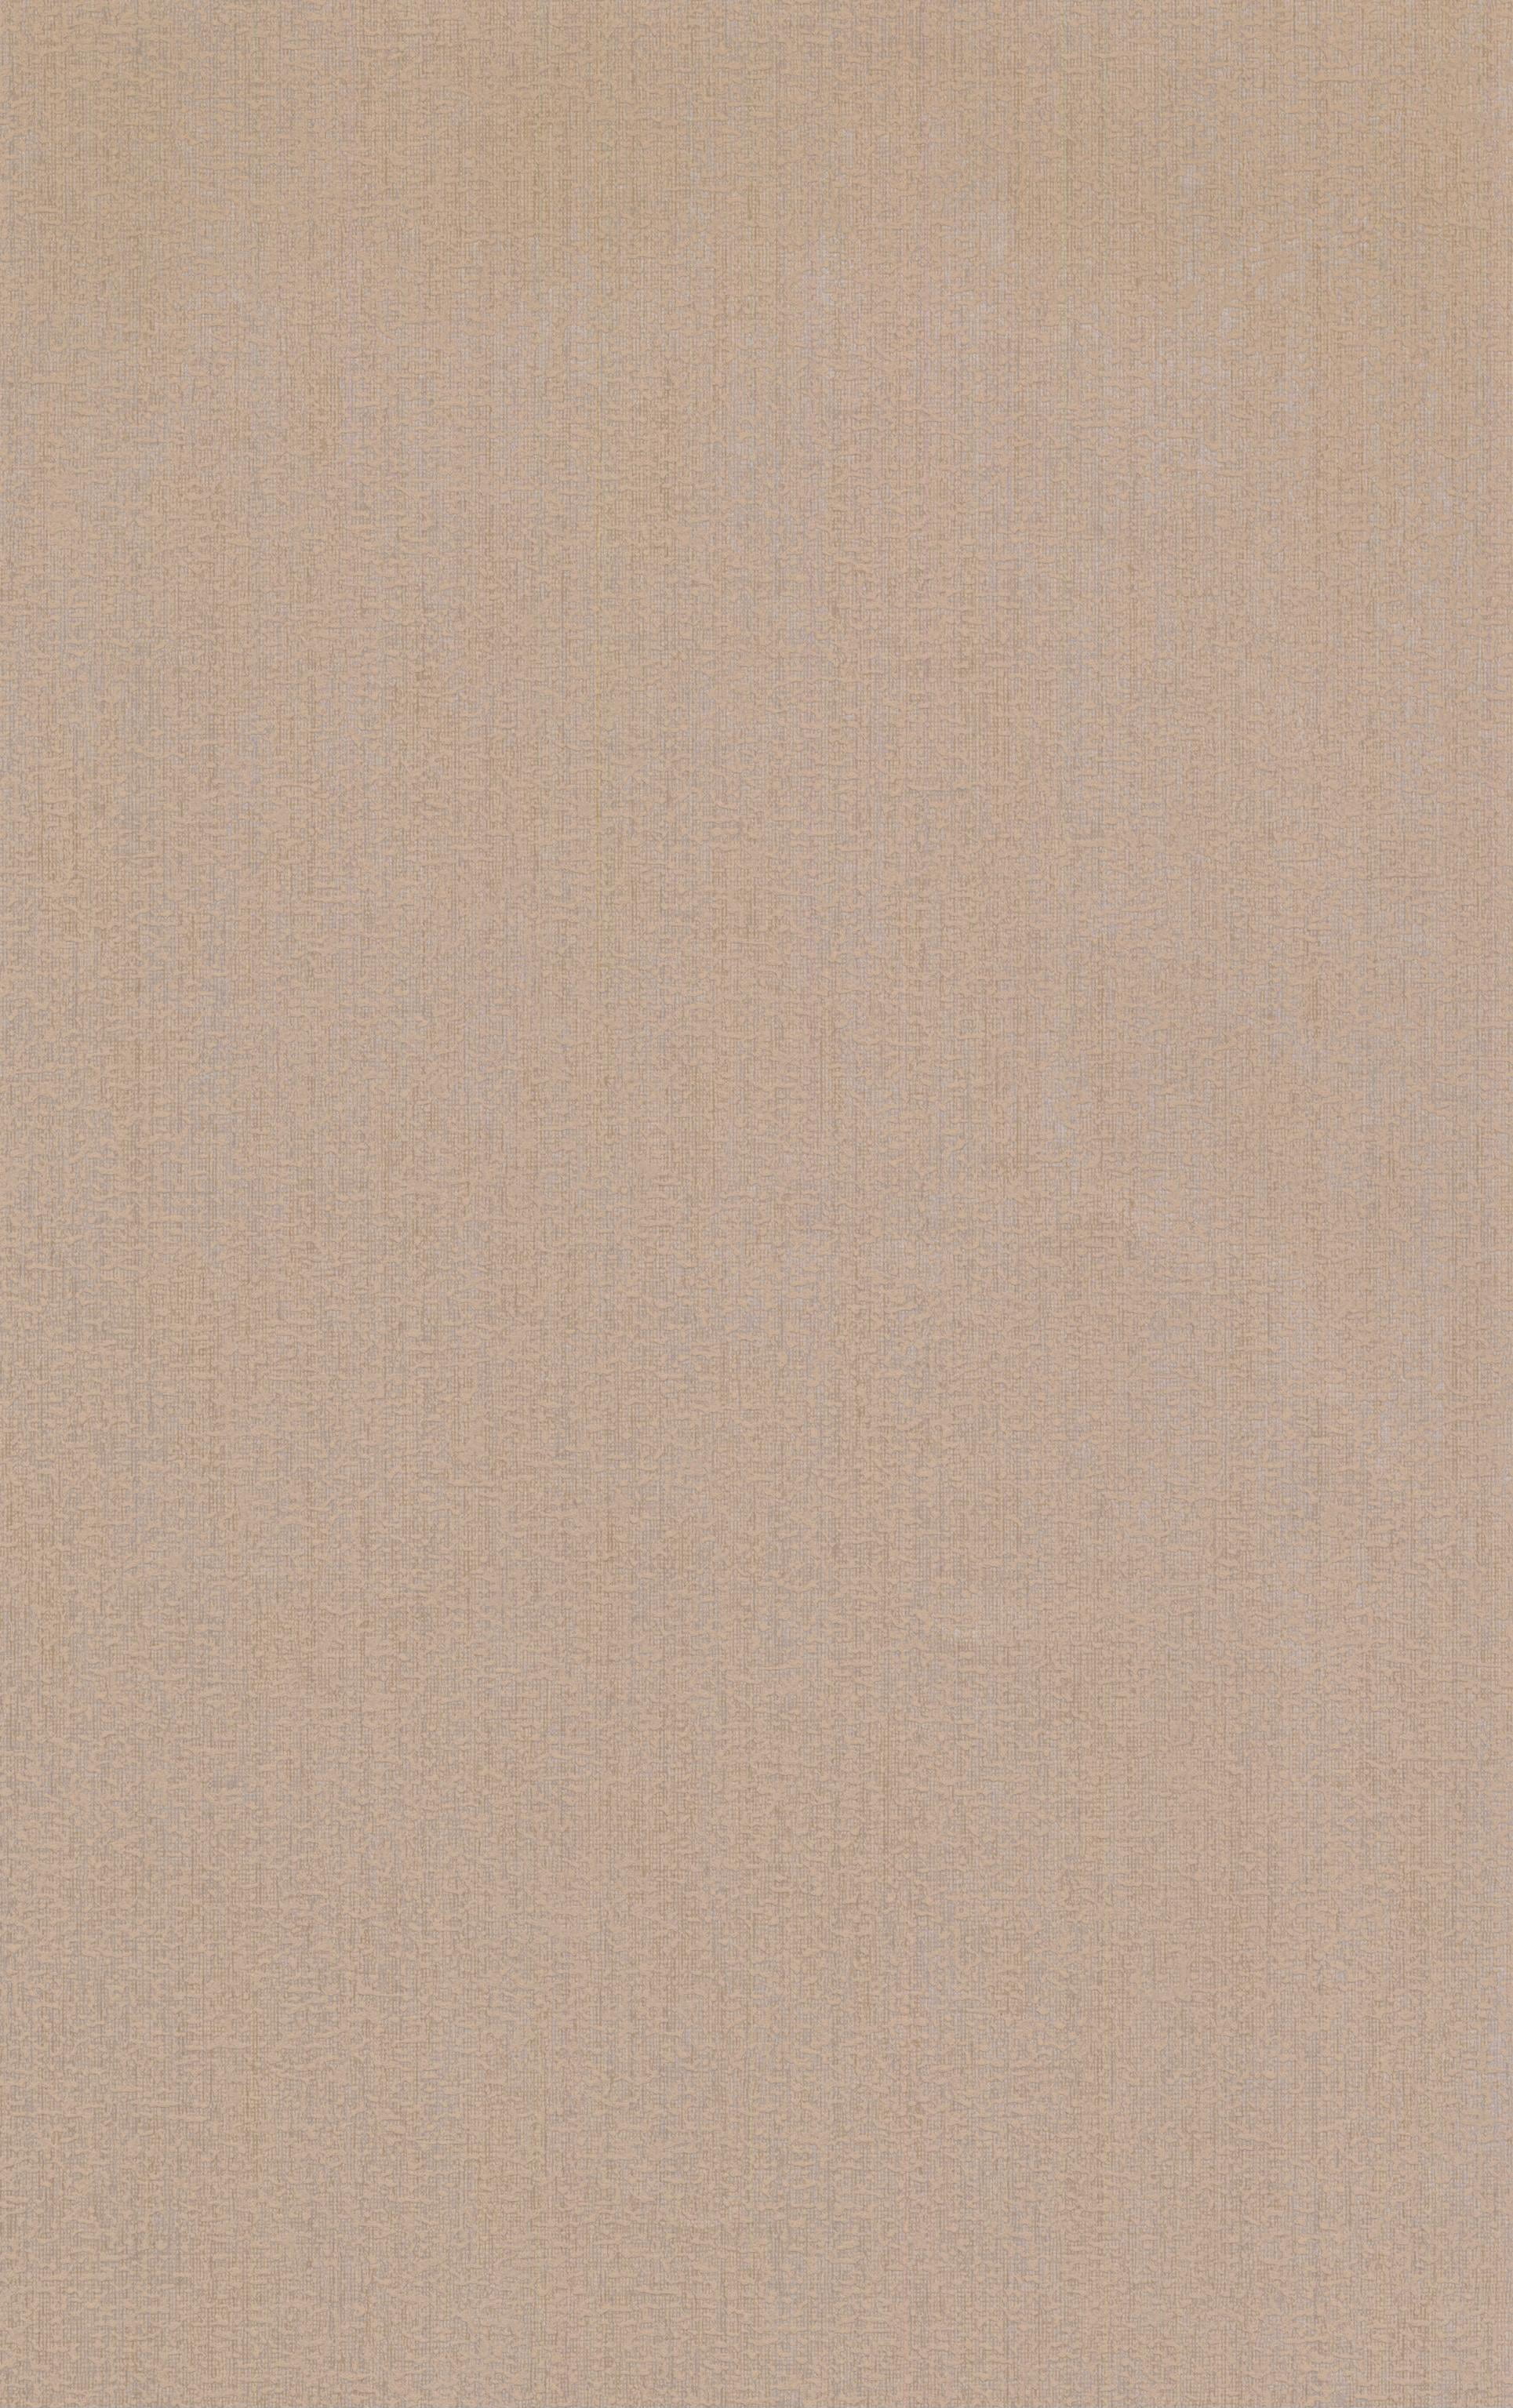 SOLID - Modern Unpasted Color Beige Wallpaper Roll